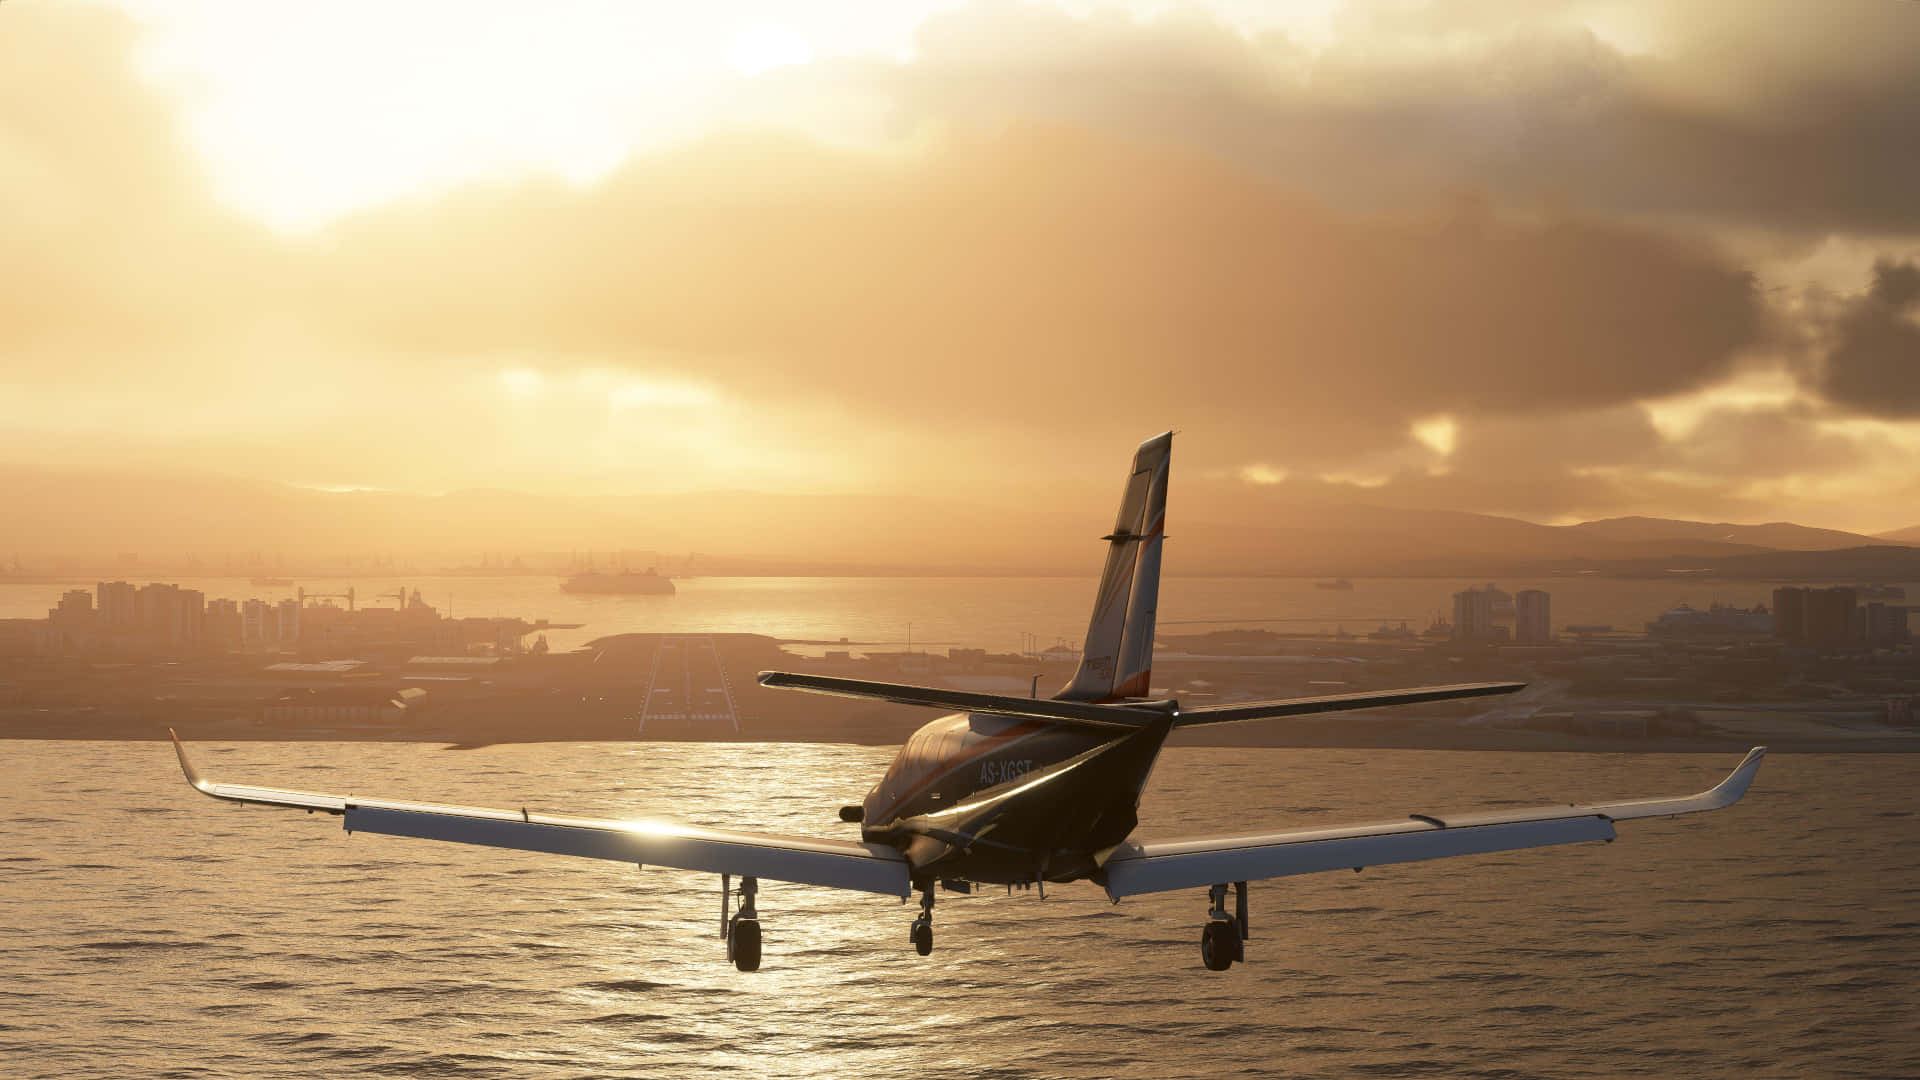 "Soar Through the Skies with Microsoft Flight Simulator"